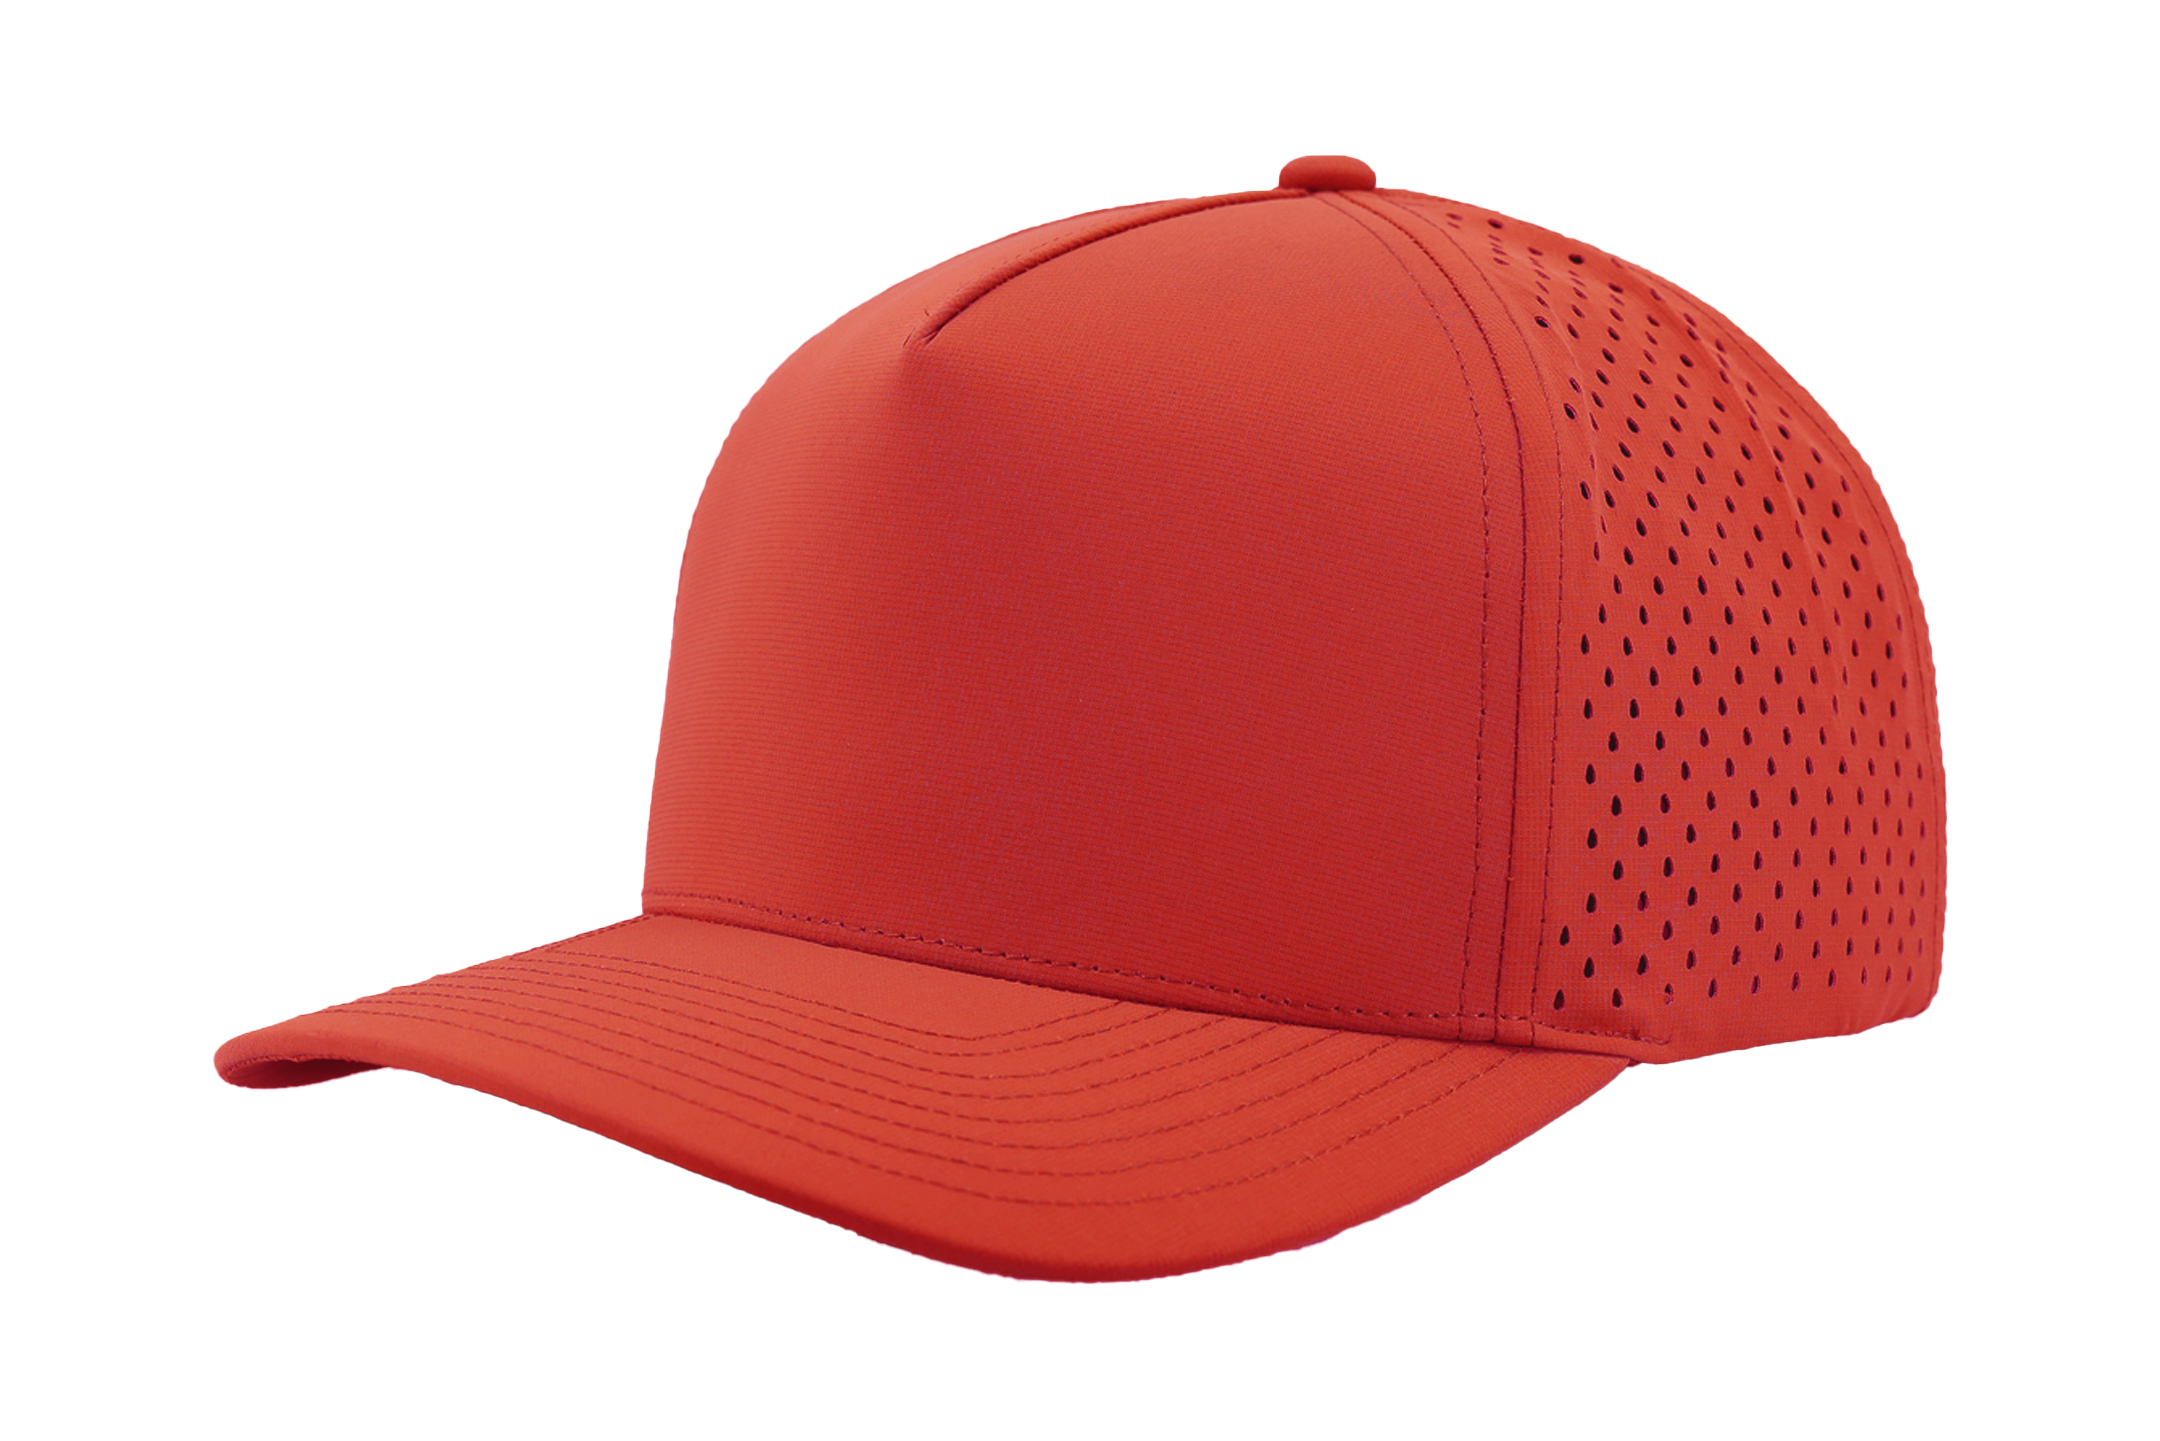 panel custom hat | Headwear 5 | Repellent Premium Zapped hat Blackhawk | Water